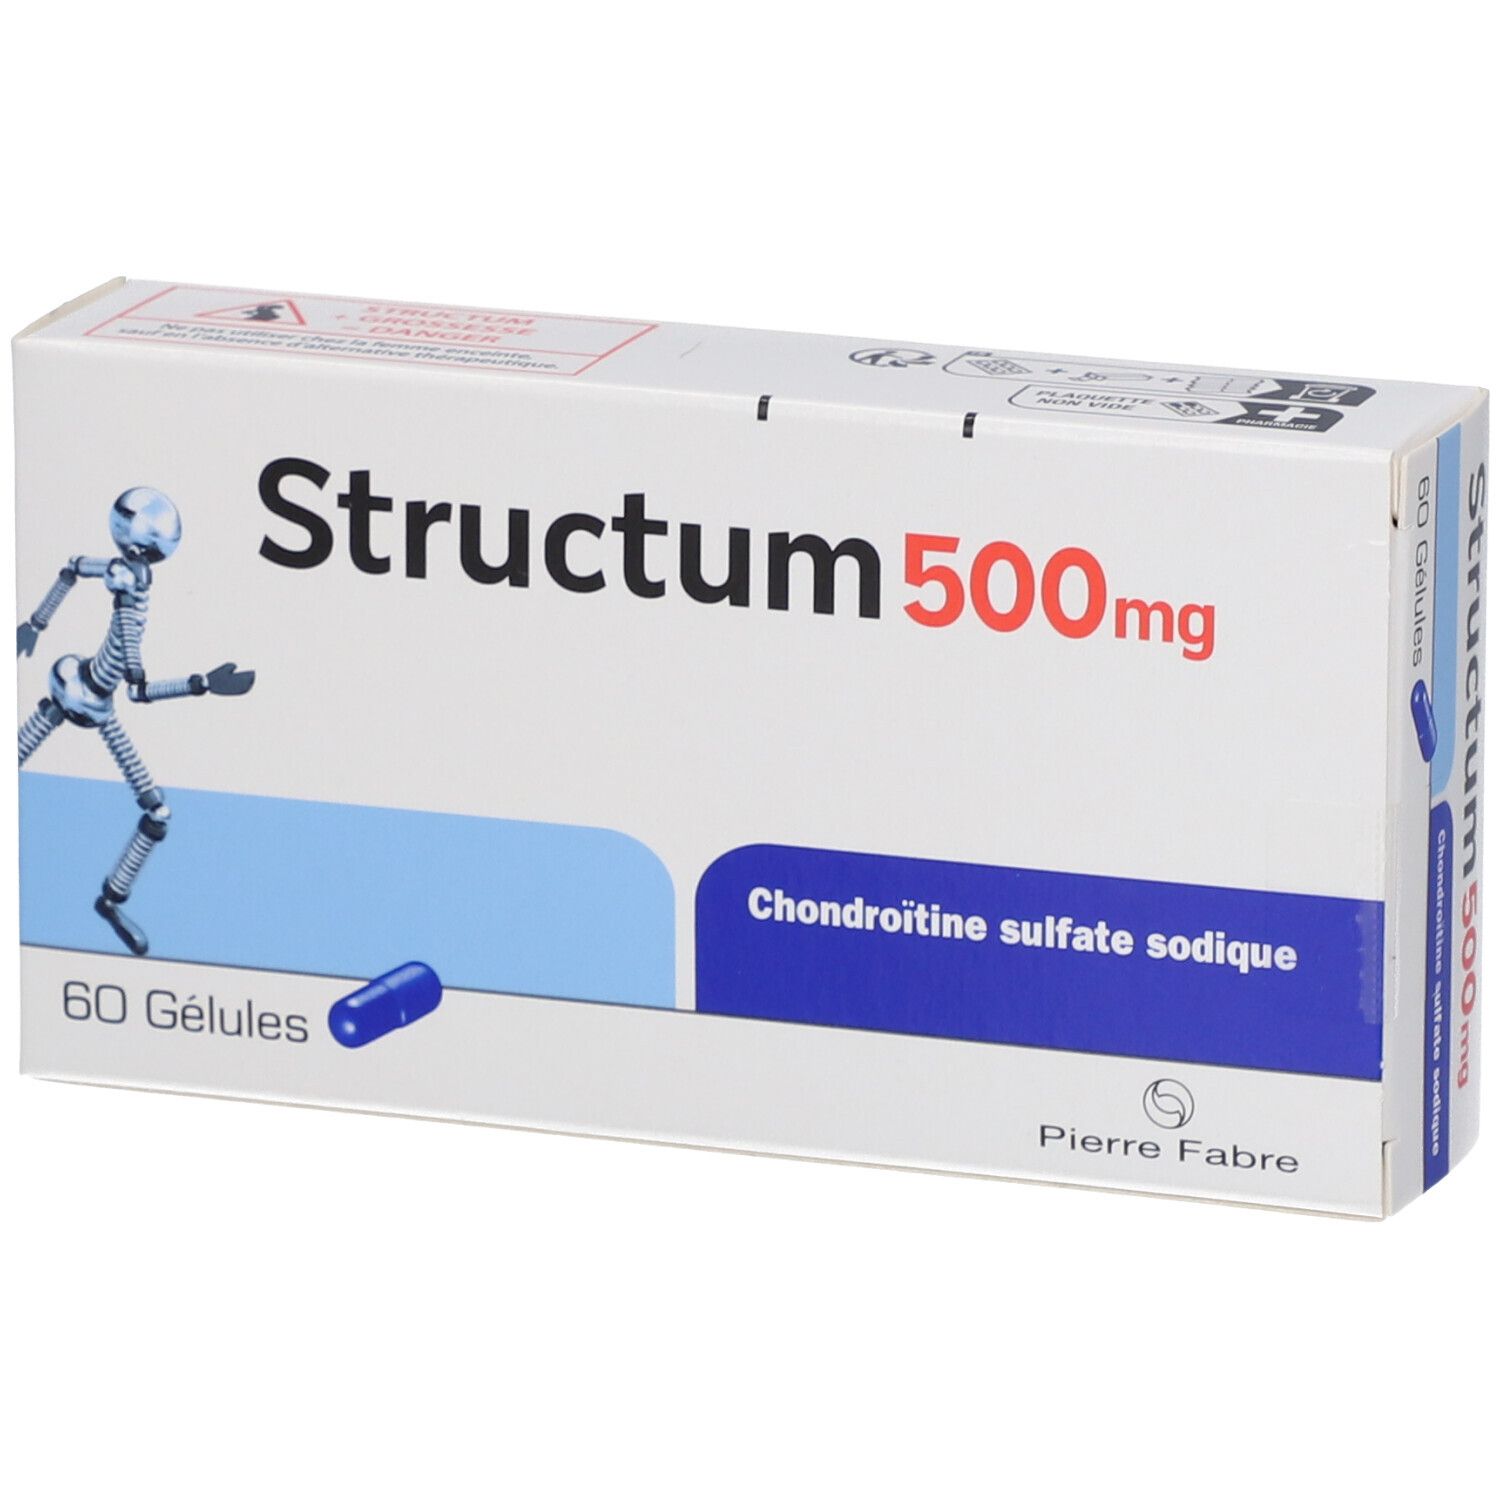 Pierre Fabre Structum 500 mg